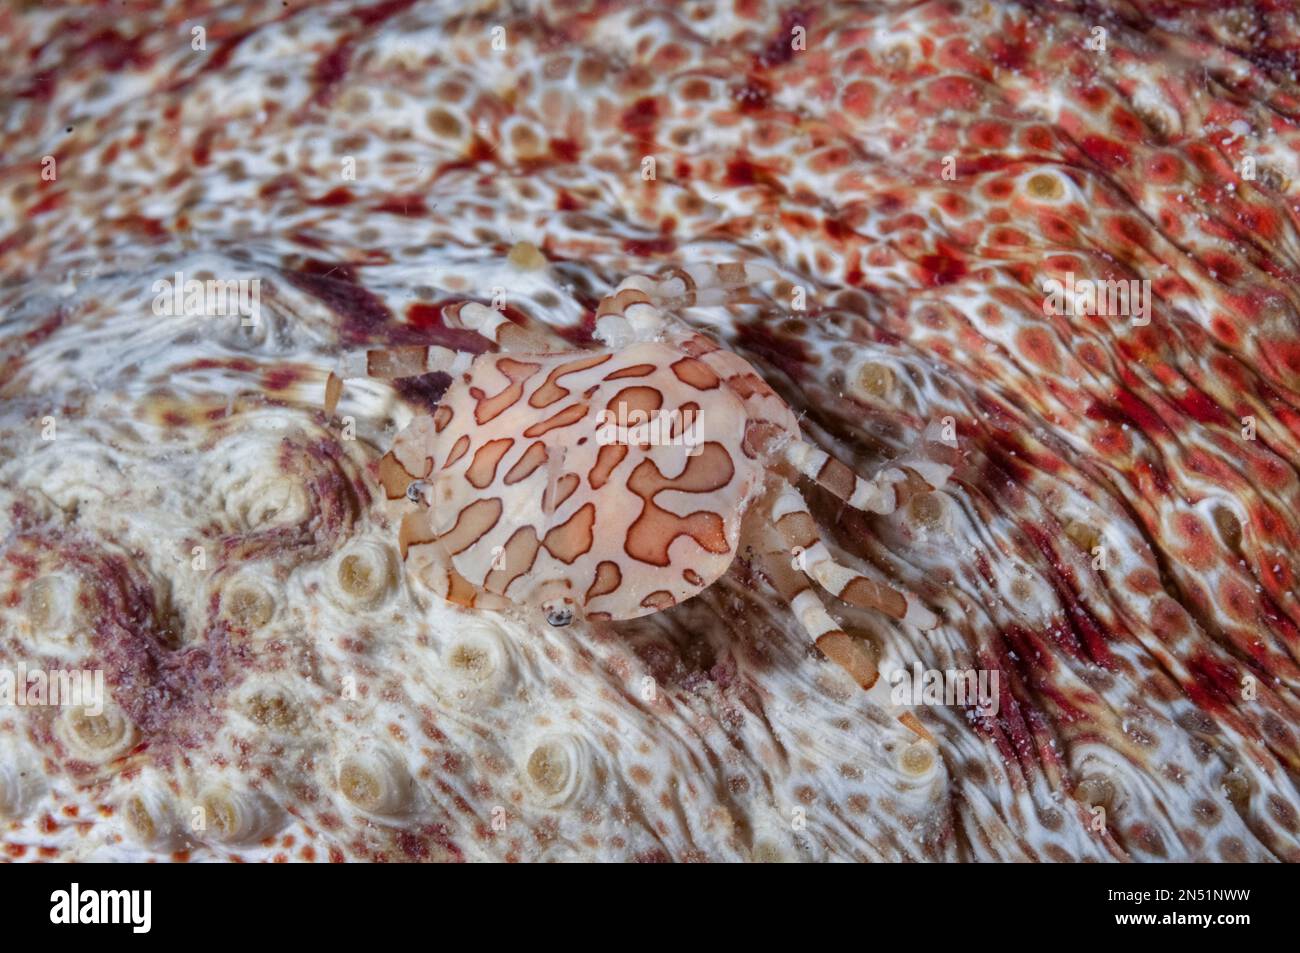 Harlequin Crab, Lissocarcinus orbicularis, on Amberfish Sea Cucumber, Thelenota anax, night dive, Paradise II dive site, Sipadan Water Village House R Stock Photo